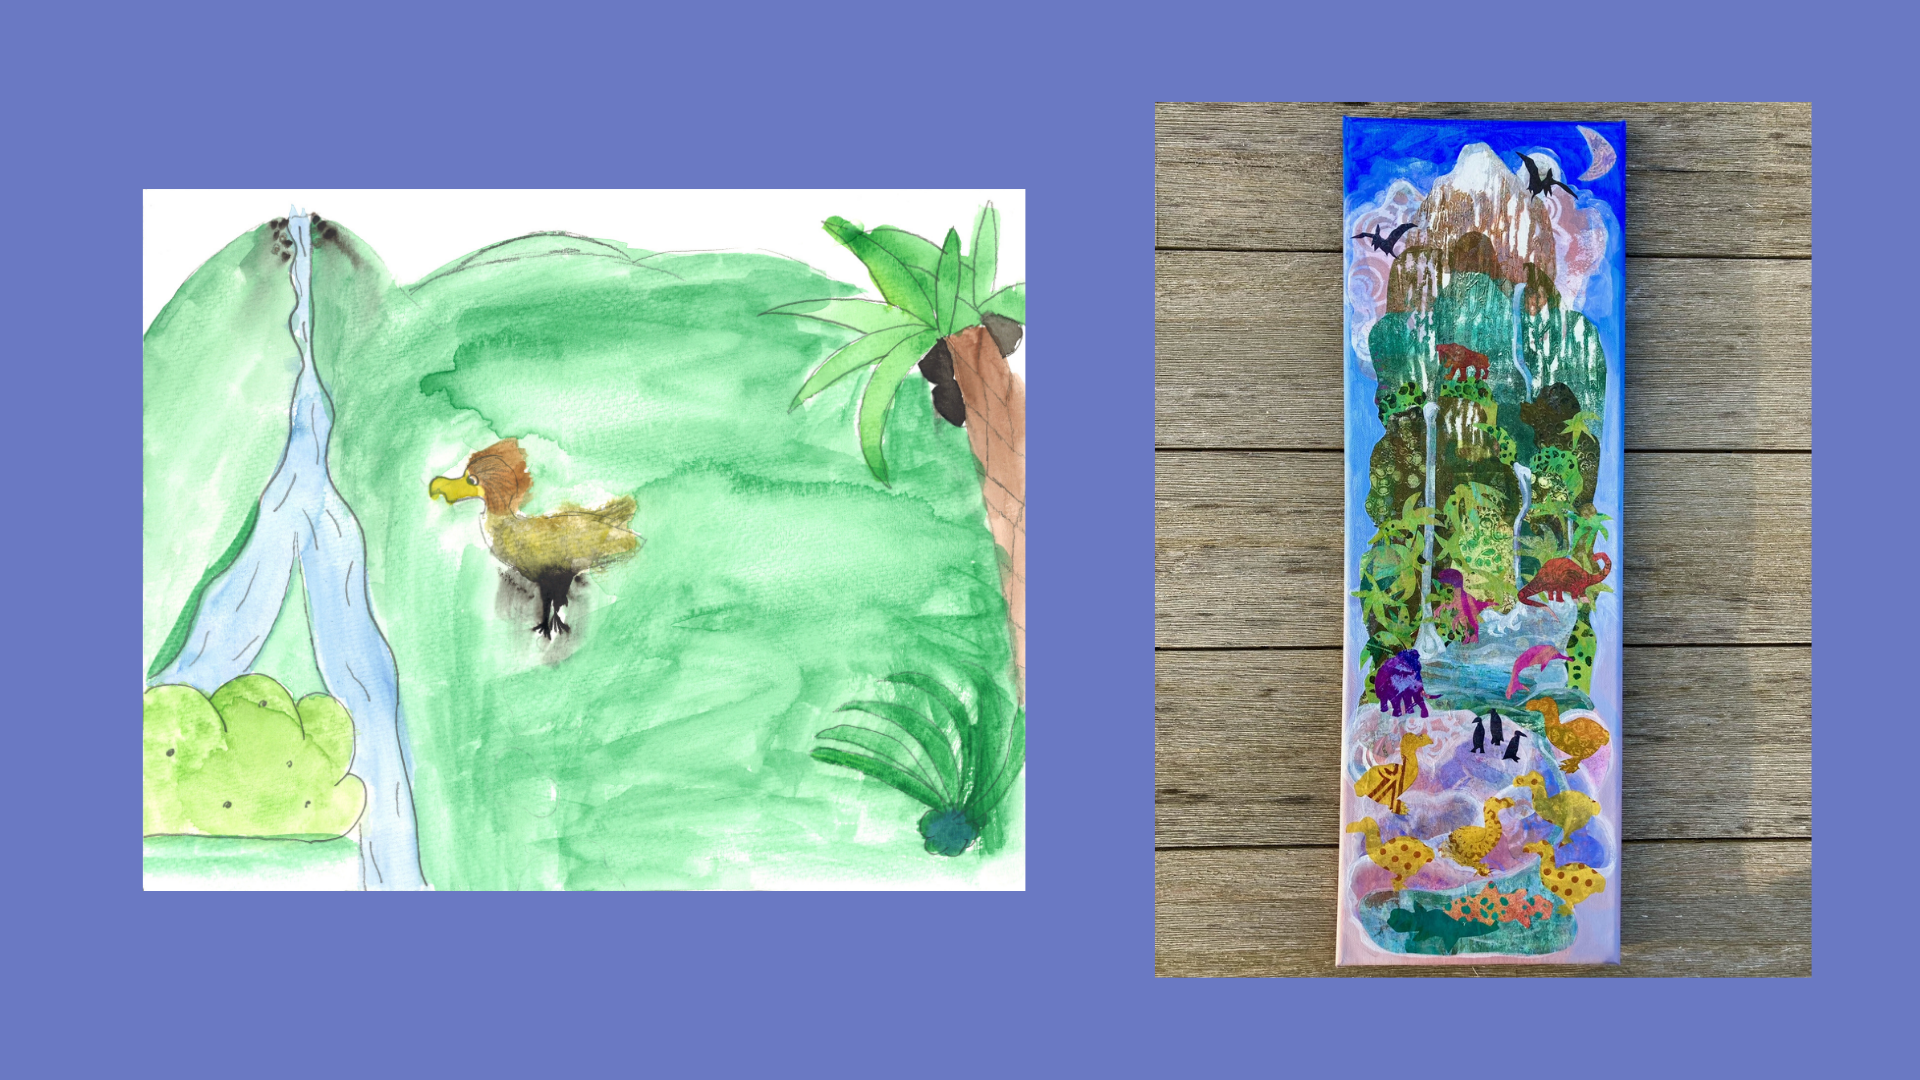 Kids Art Kit - Fall Fox – Robyn Smith Art Adventures